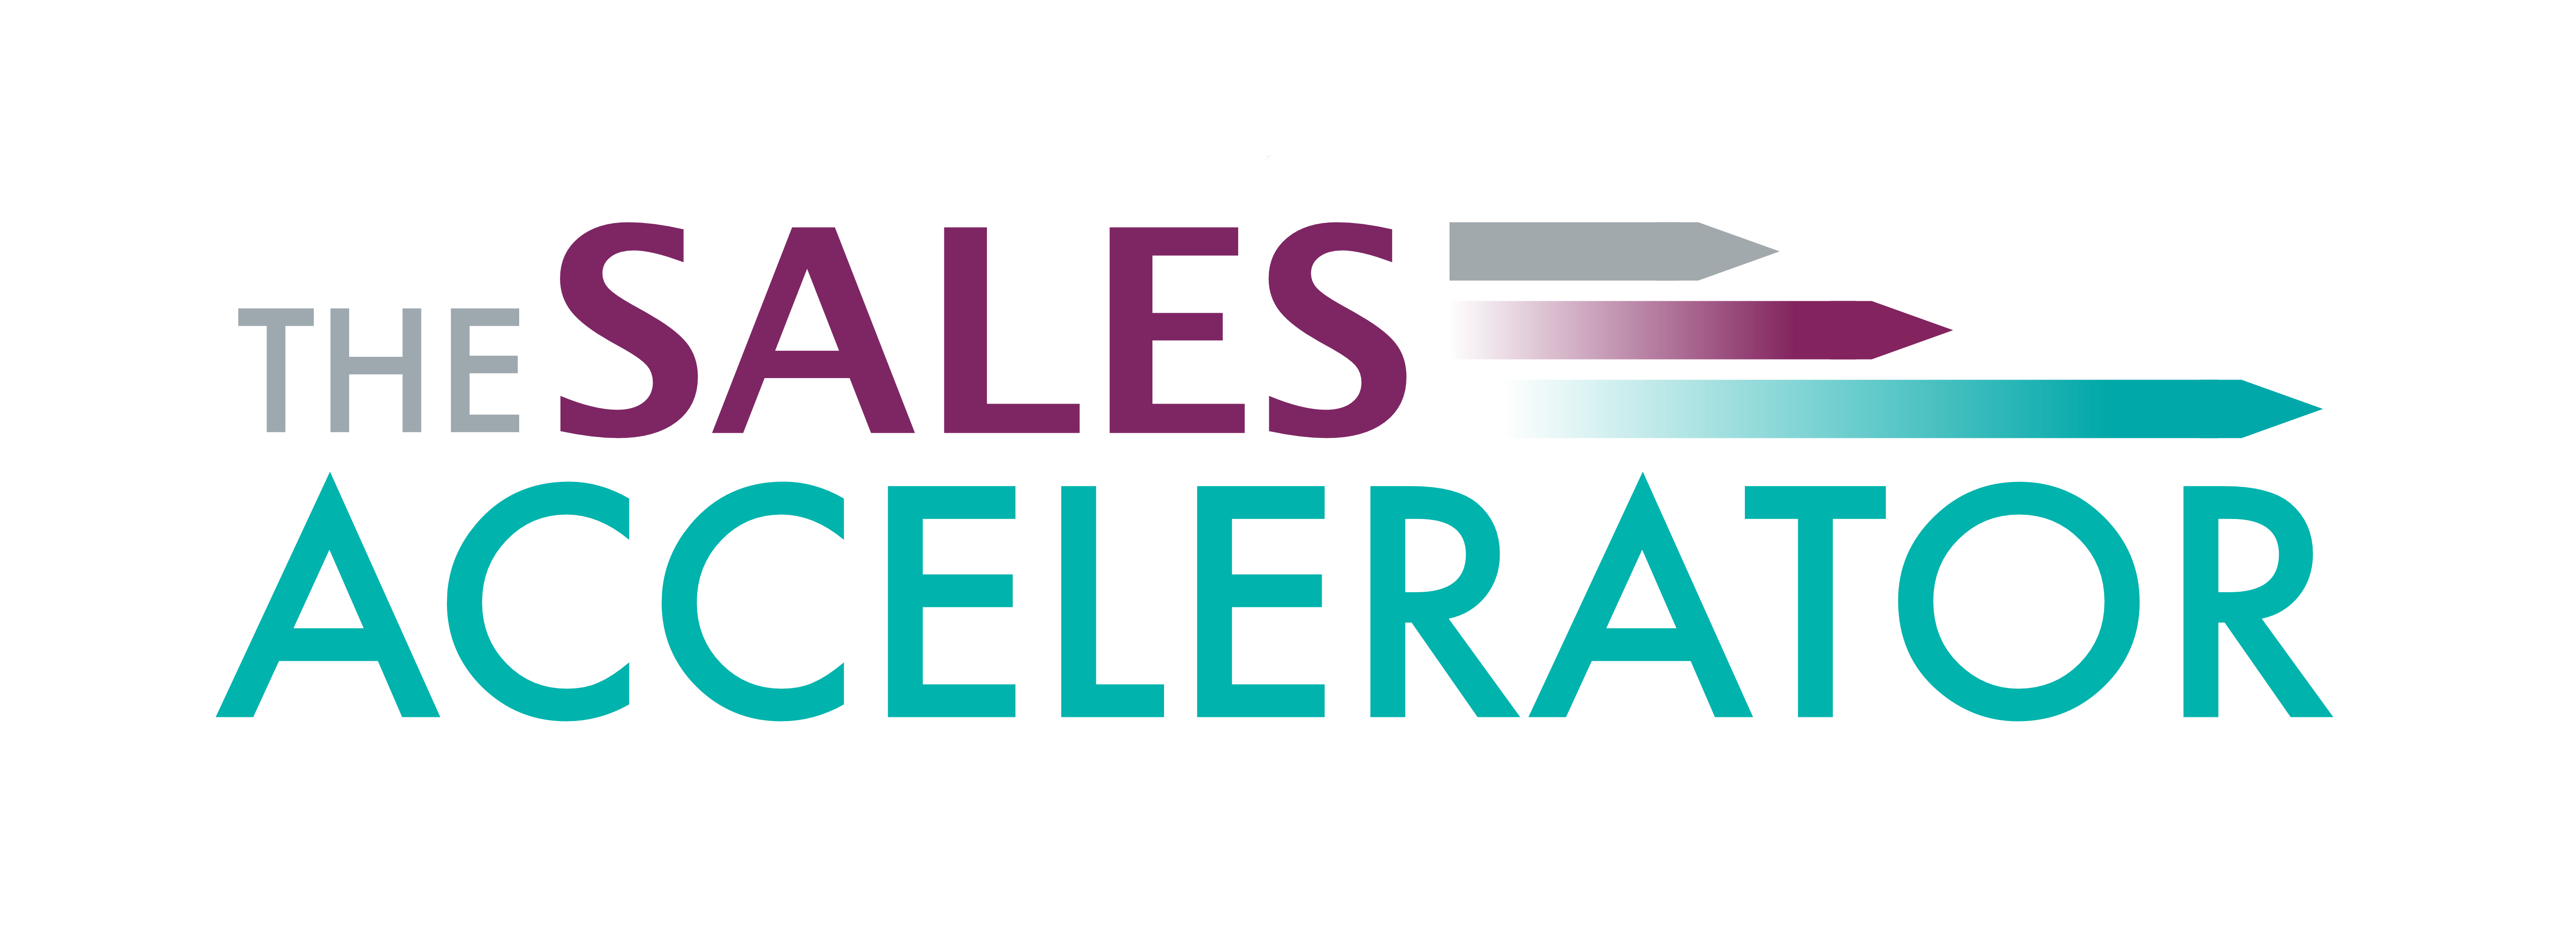 The Sales Accelerator logo